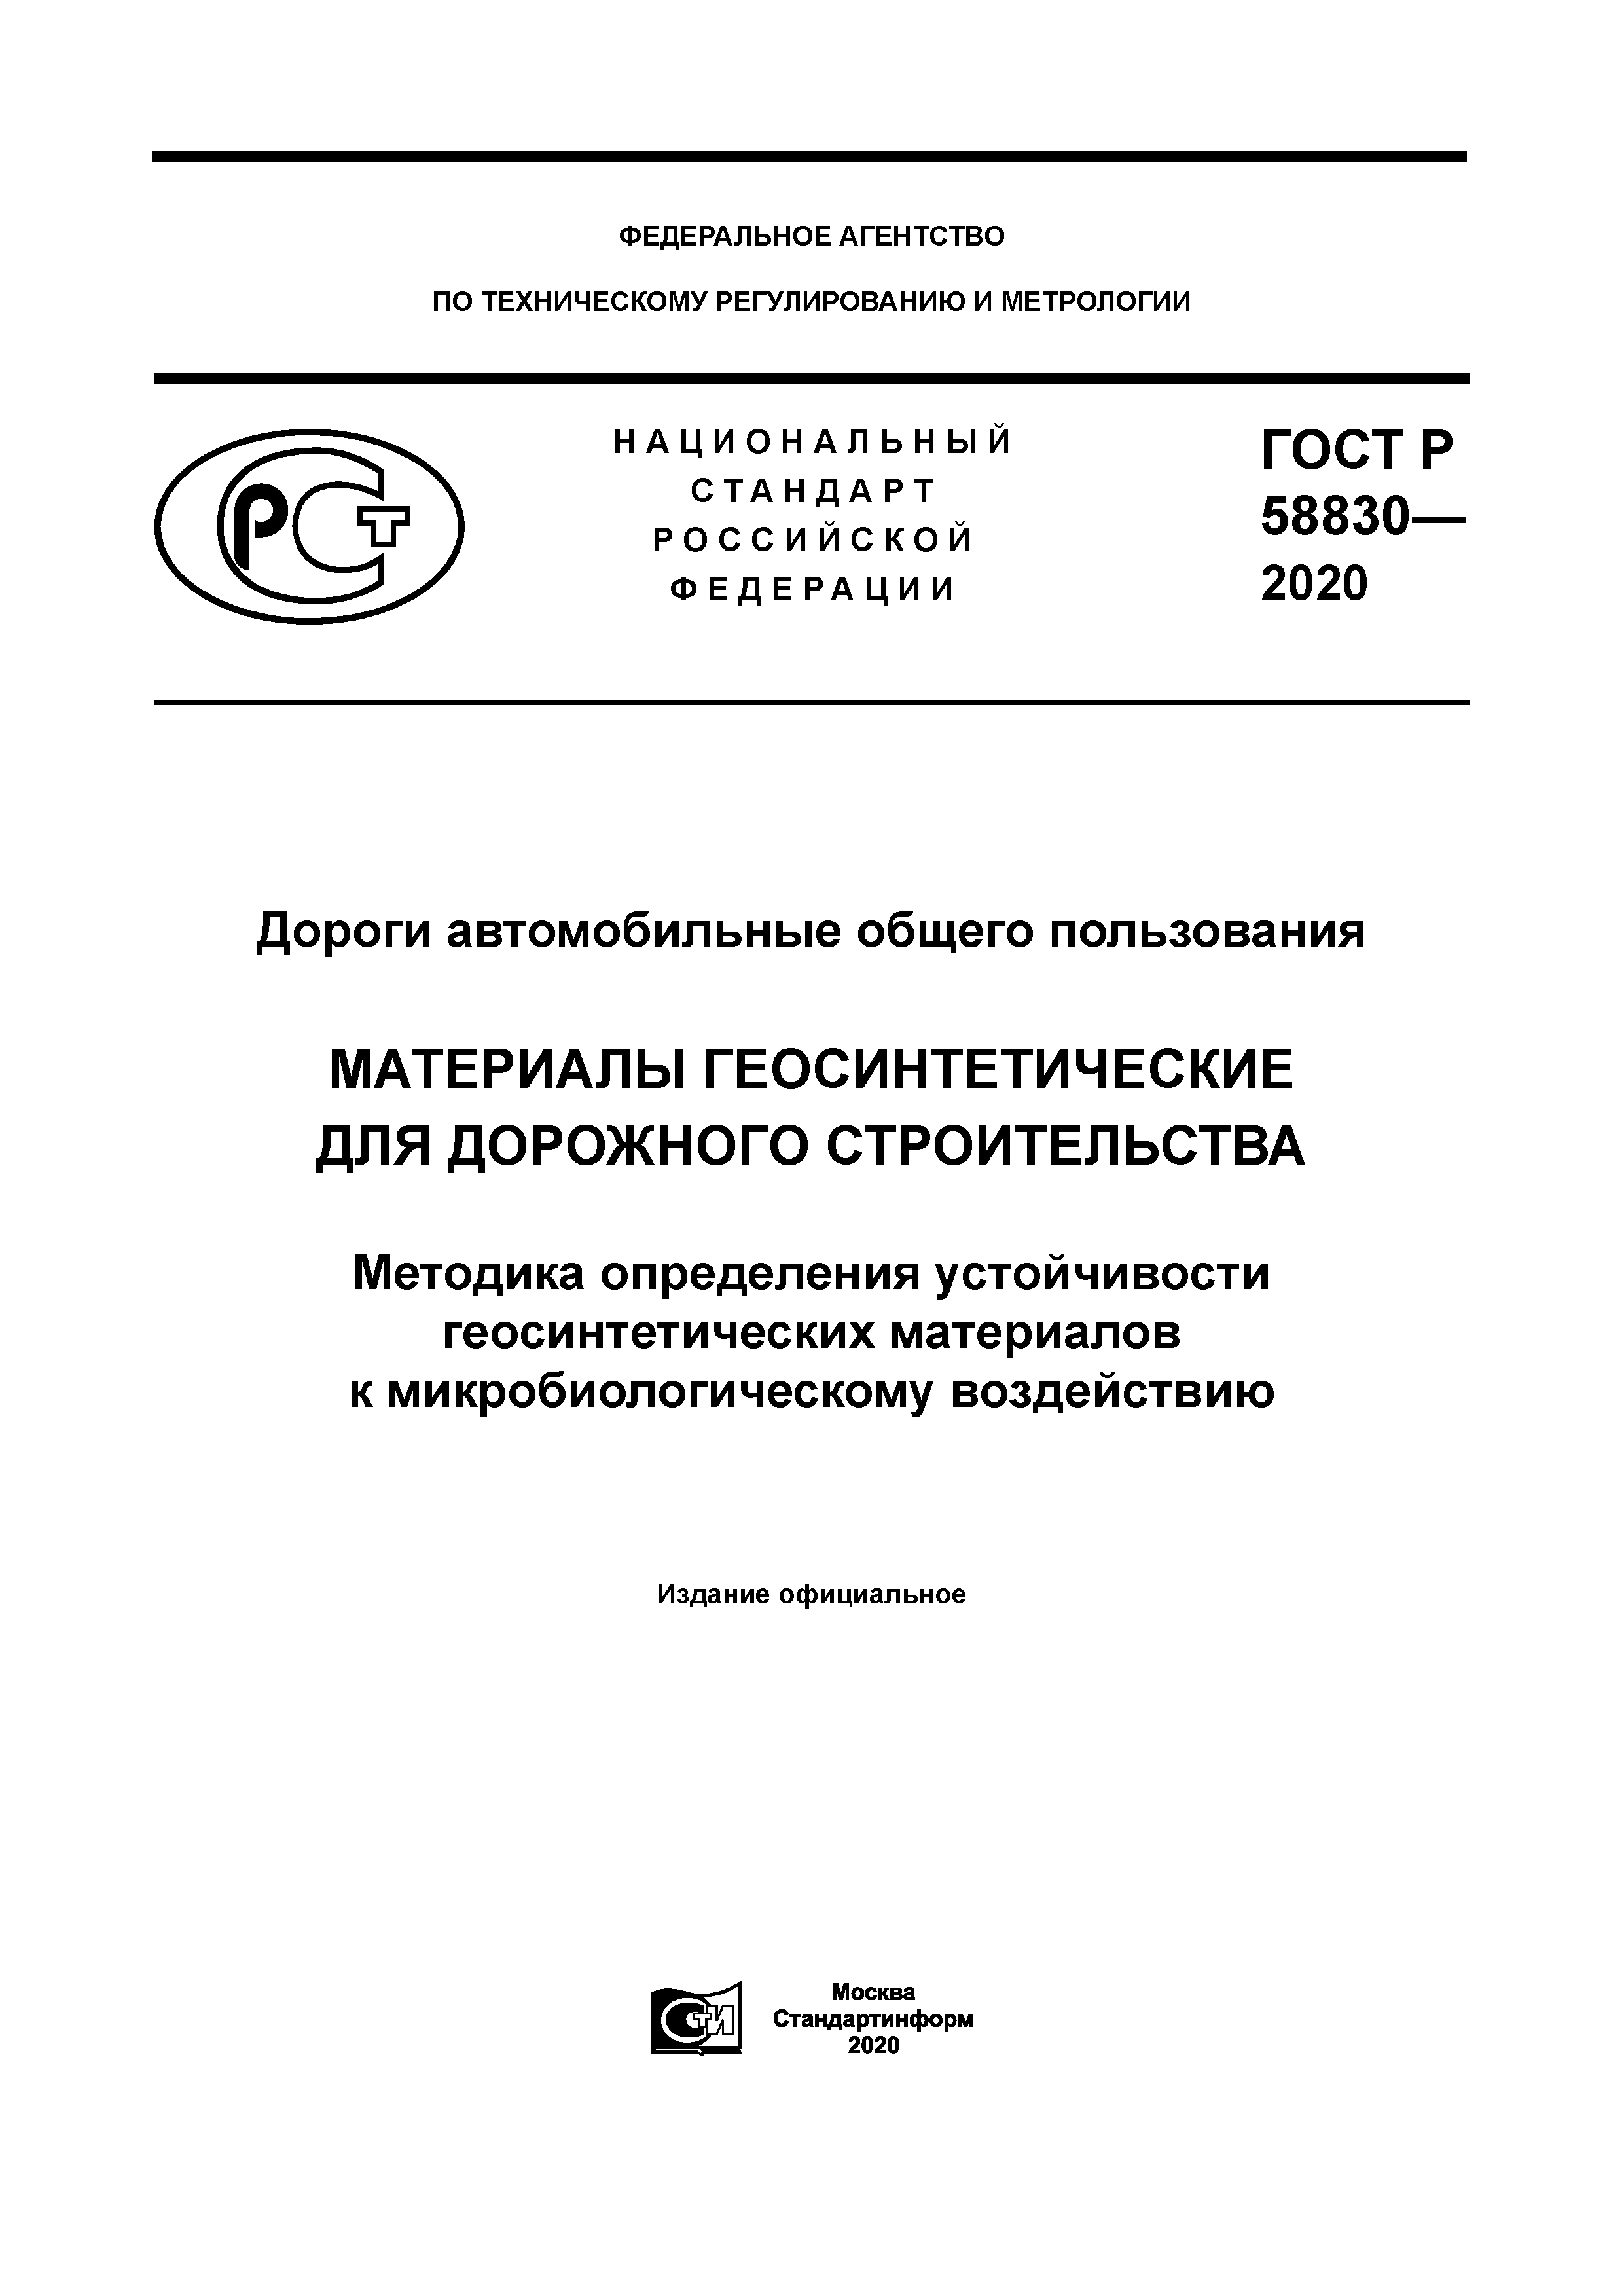 ГОСТ Р 58830-2020